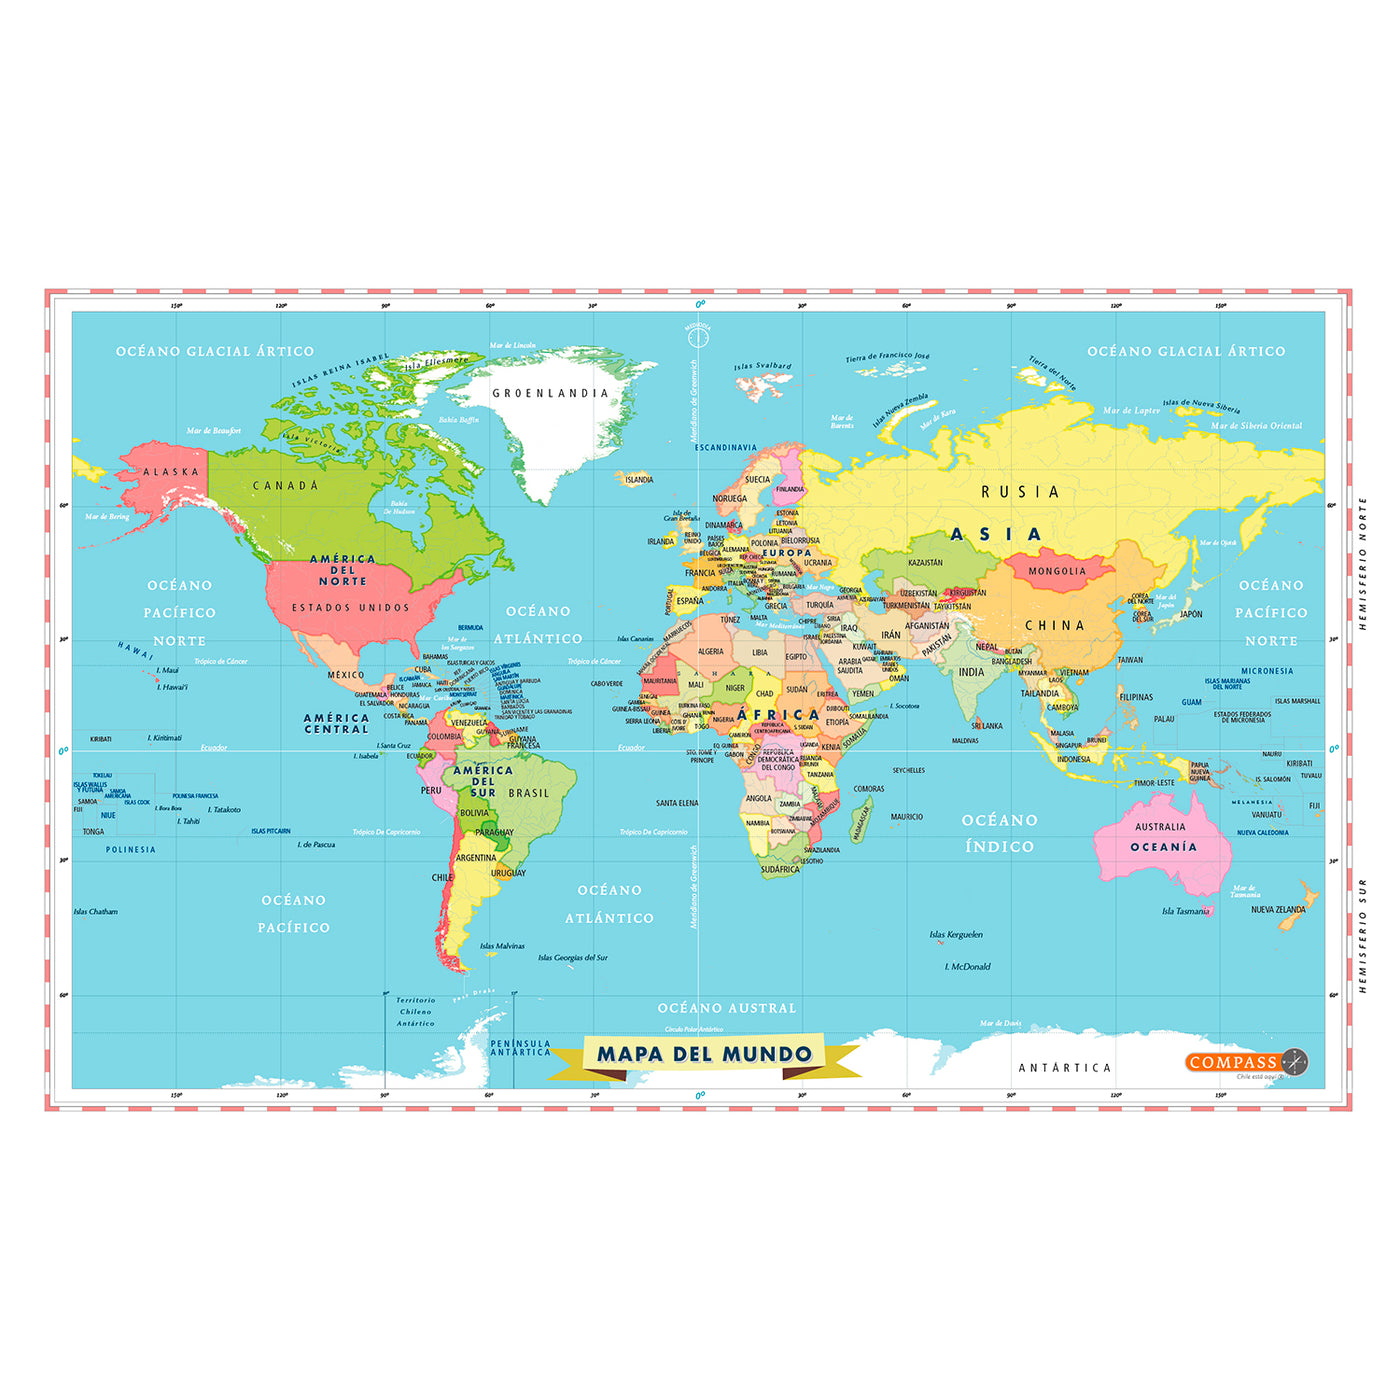 Mapa del mundo con nombres de países - MapaMundi